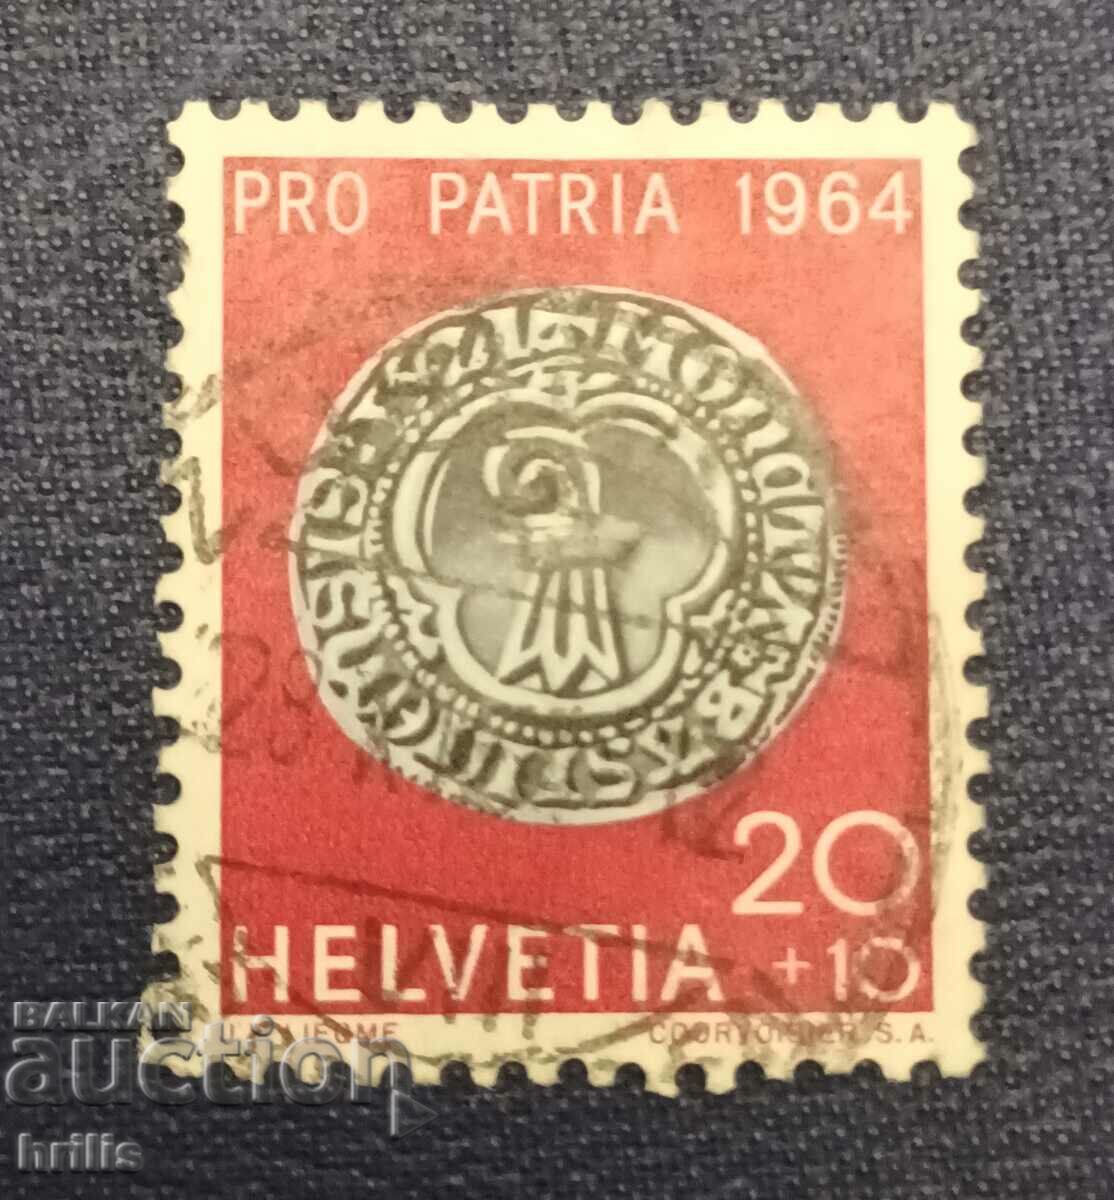 ELVETIA 1964 - PENTRU PATRA MAMA